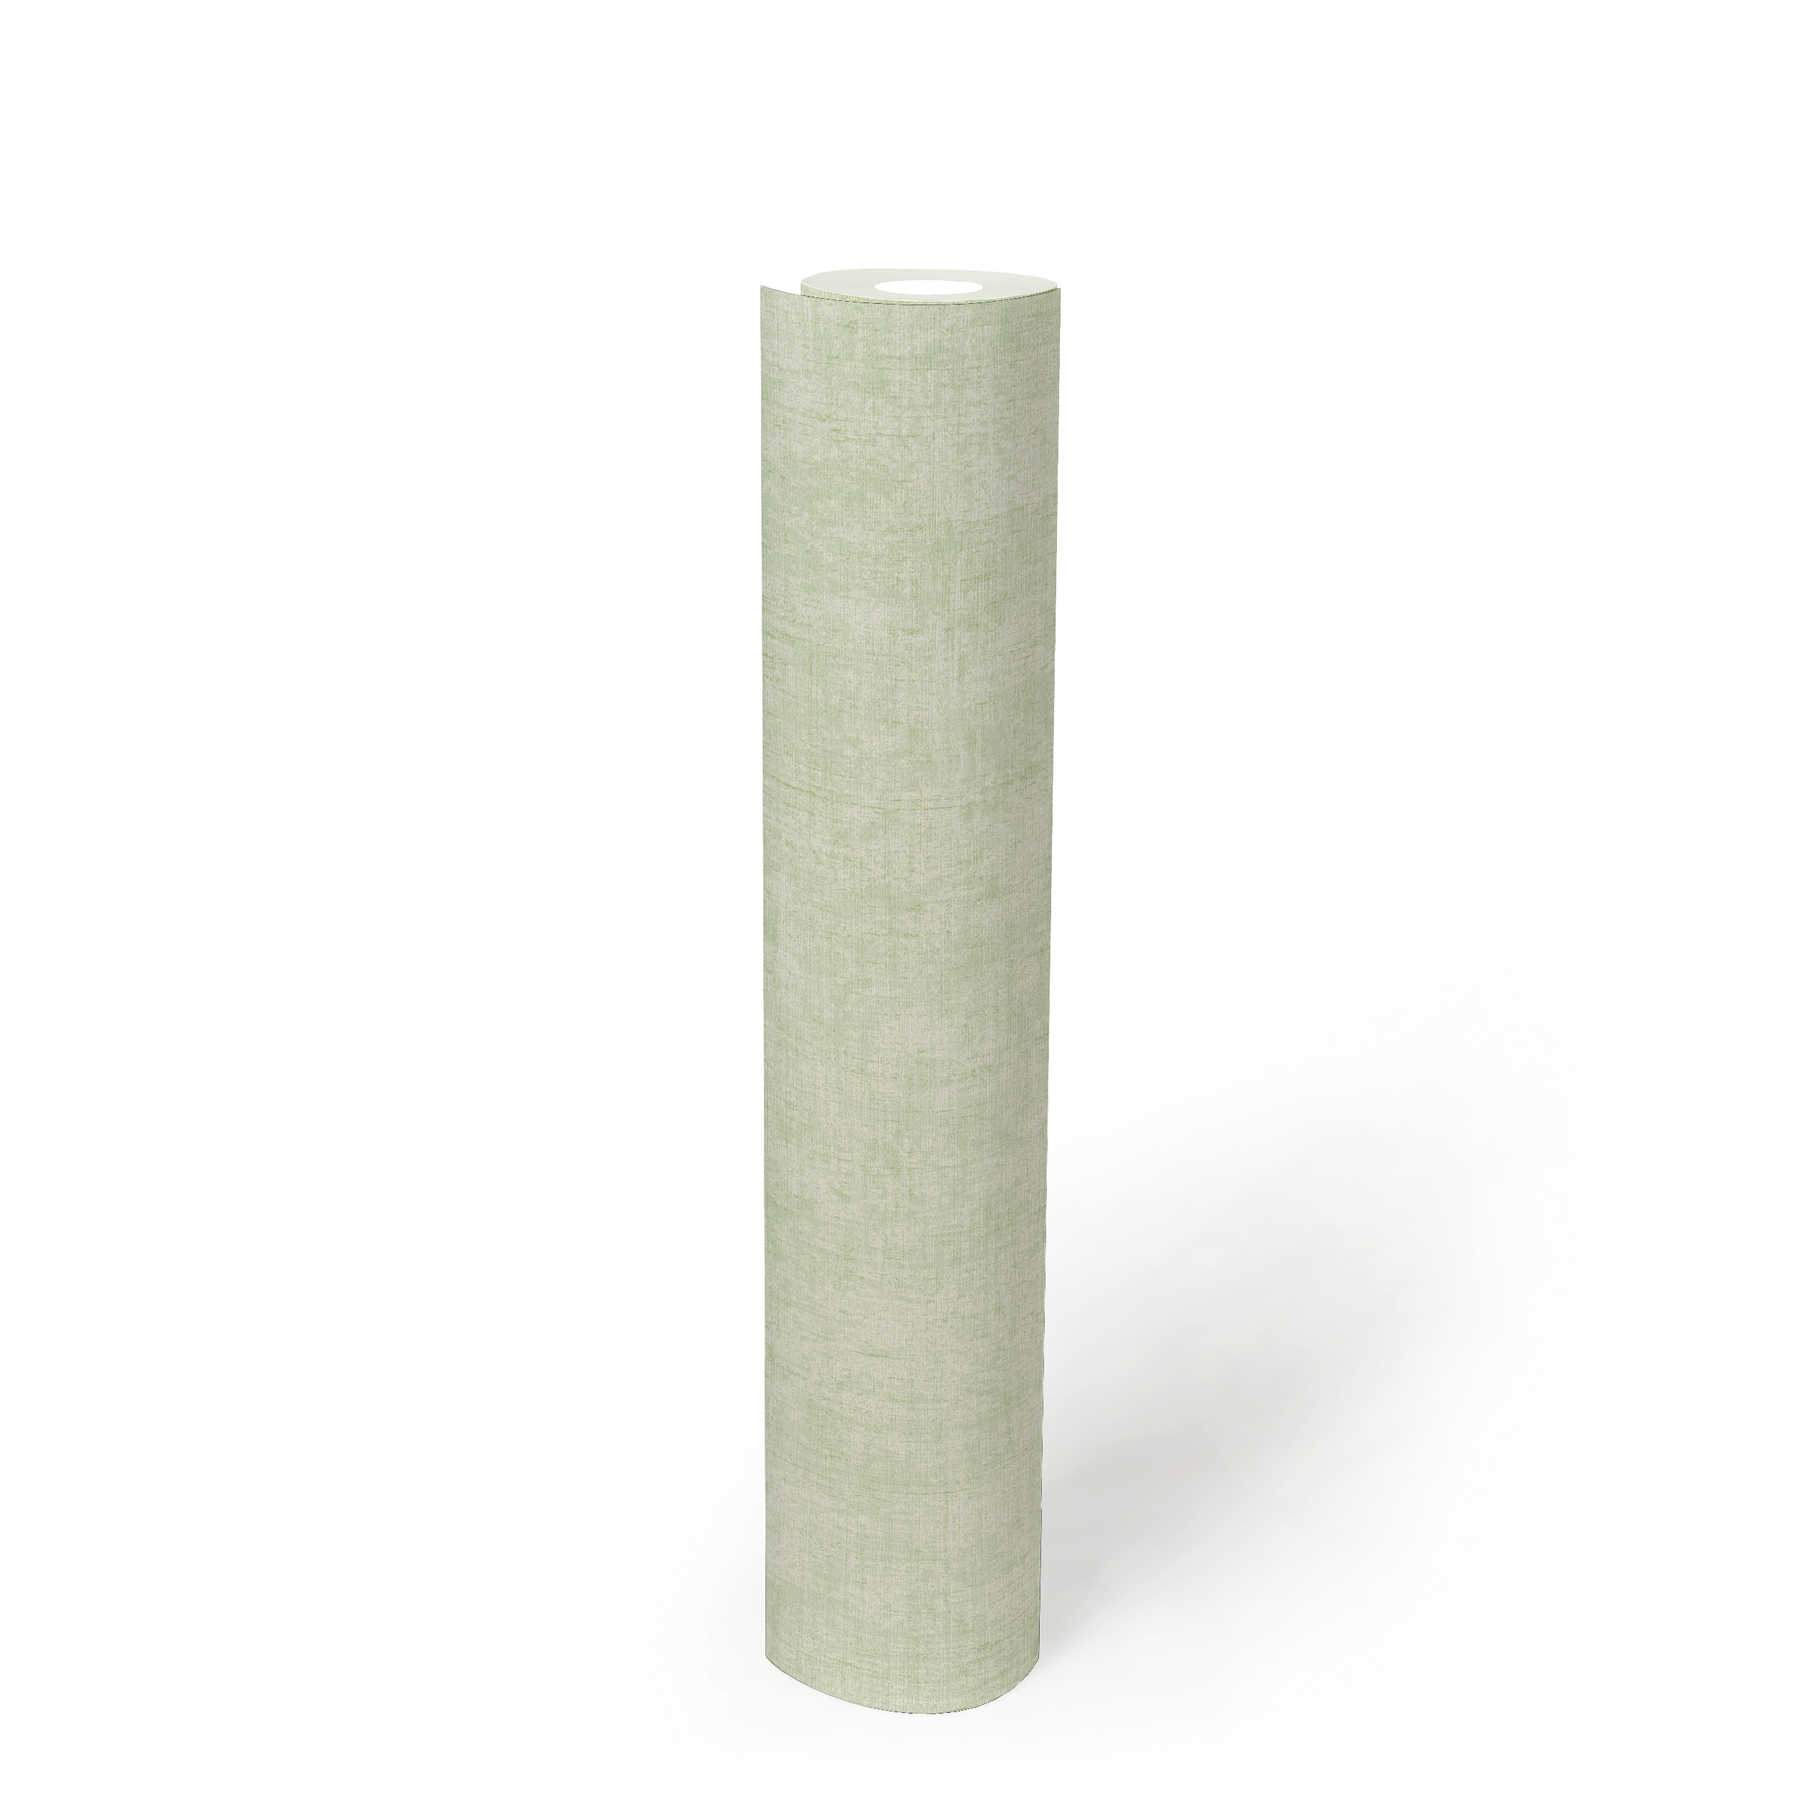             Papier peint vert tilleul Vert gris chiné avec structure naturelle
        